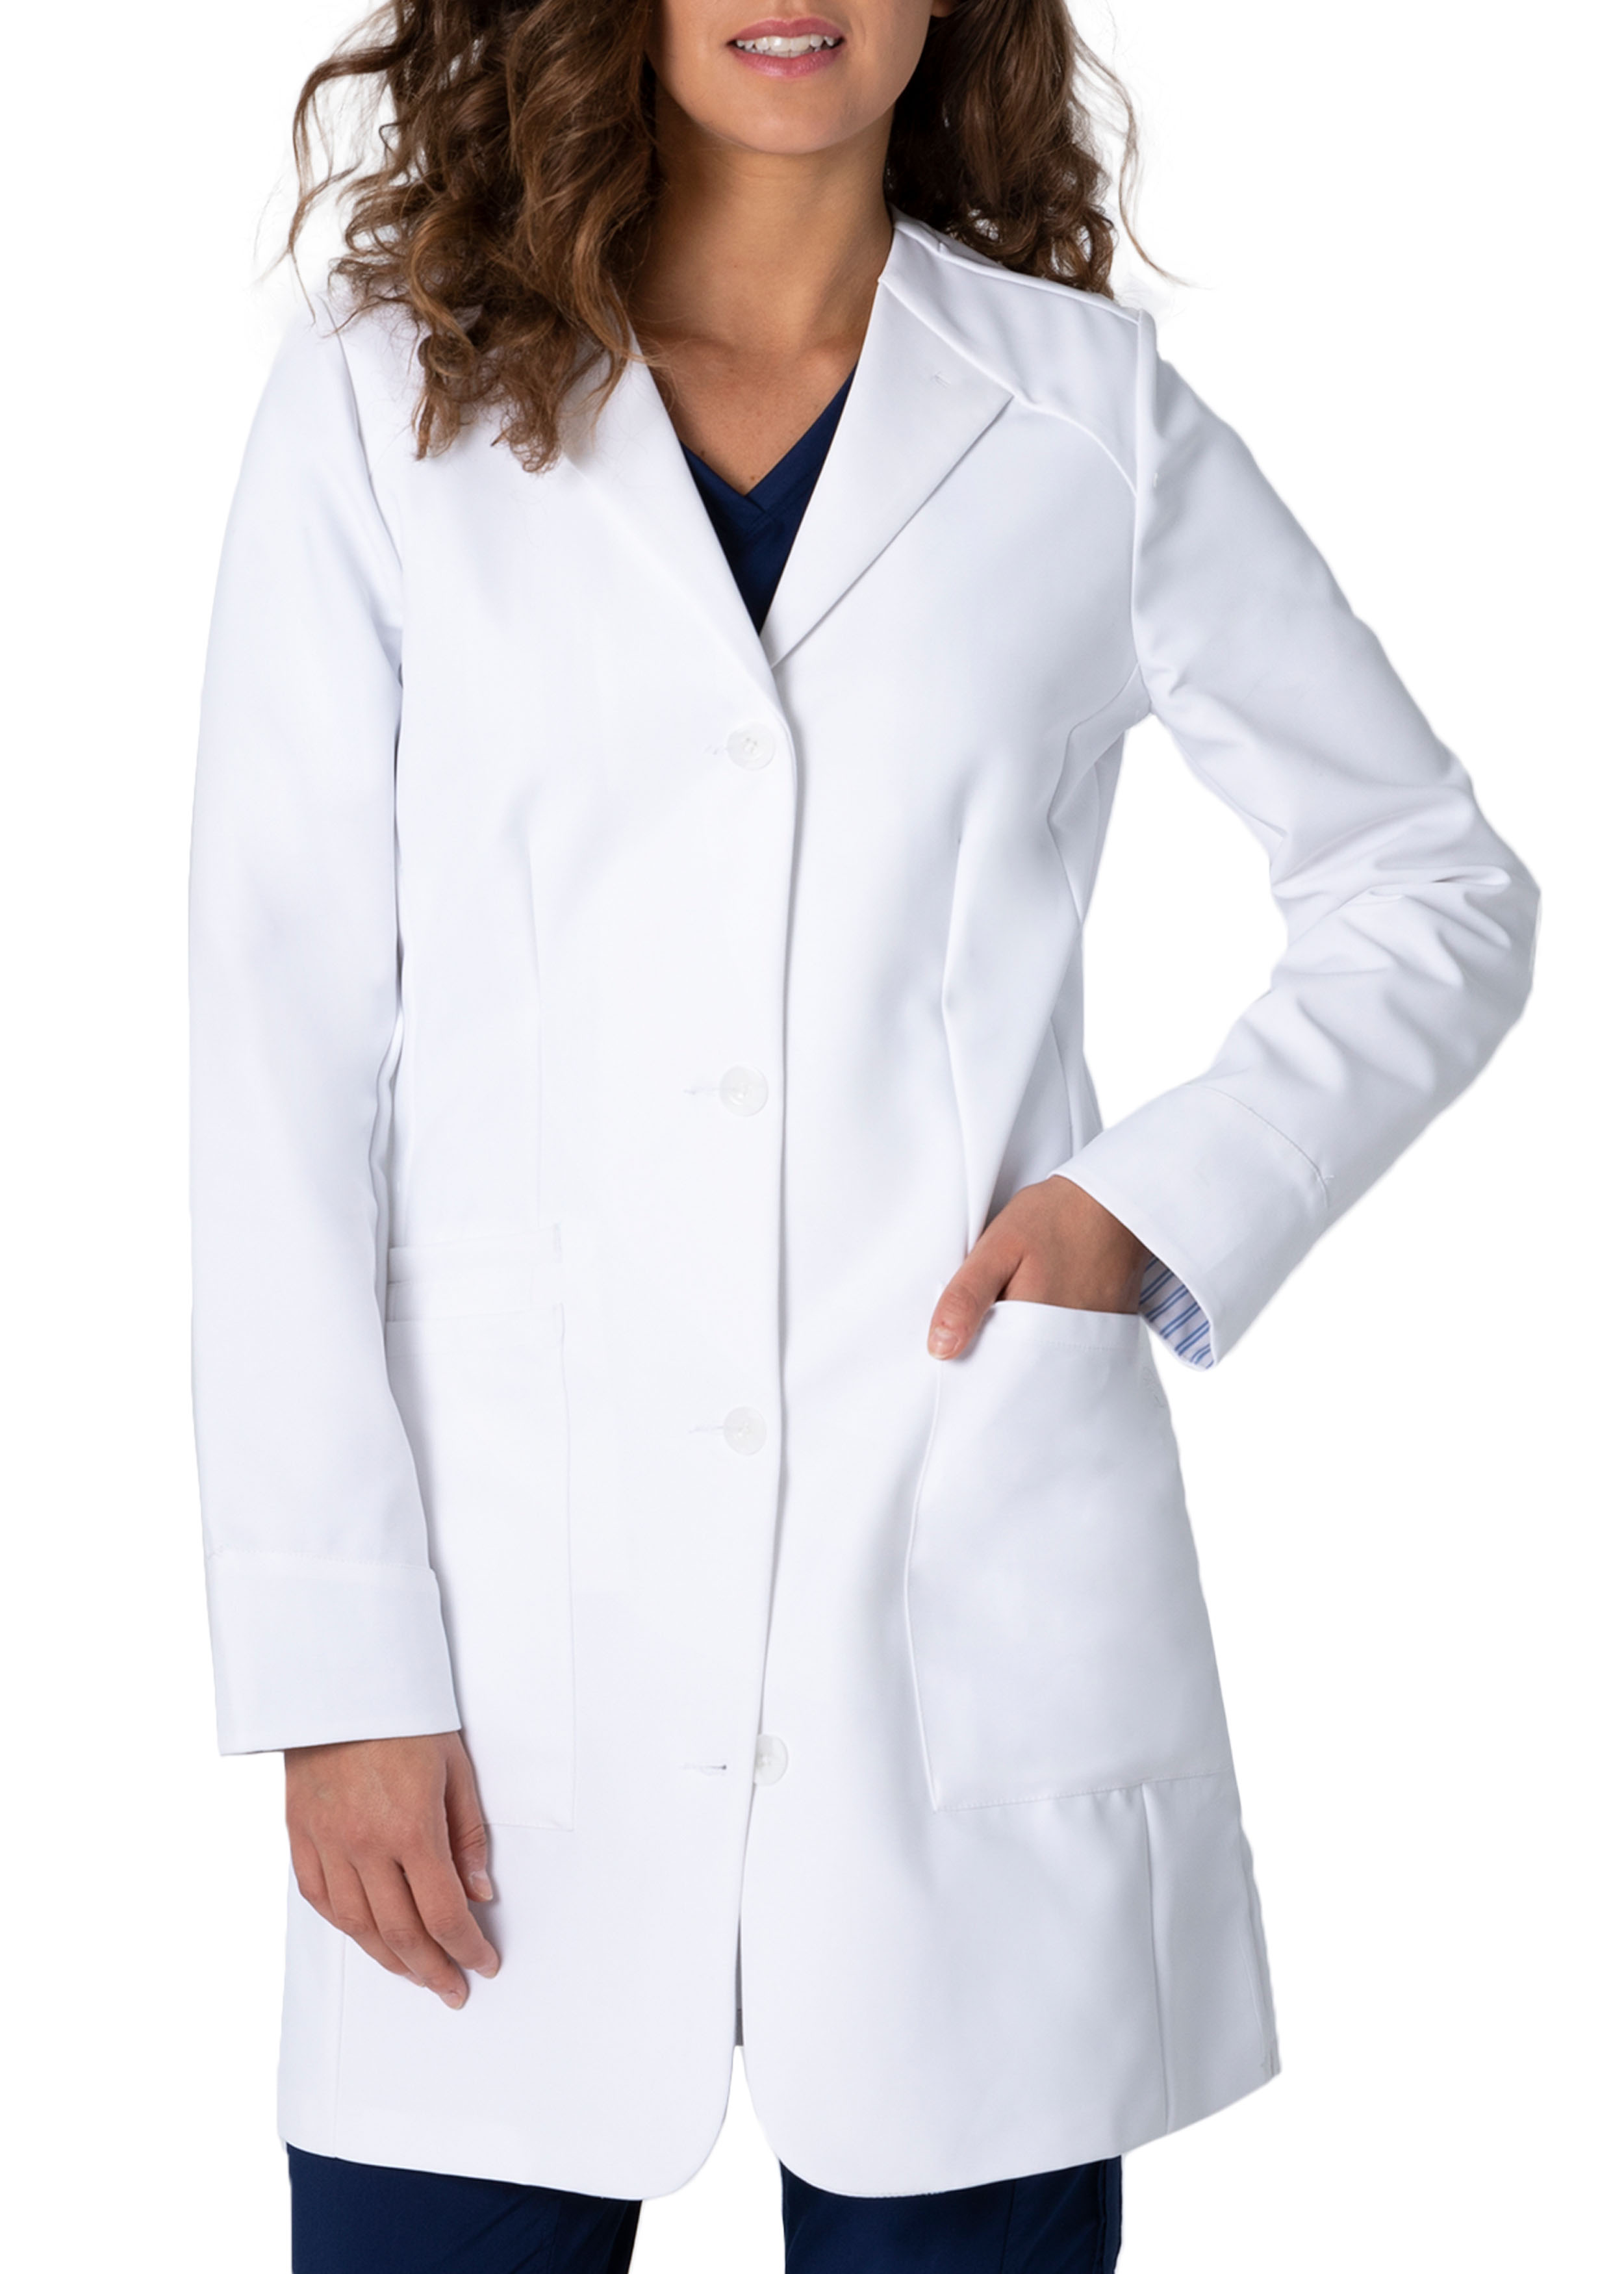 NY Threads Ny Threads Professional Lab Coat For Women, Full Sleeve Cotton  Blend Long Medical Coat (White, 3X-Large)